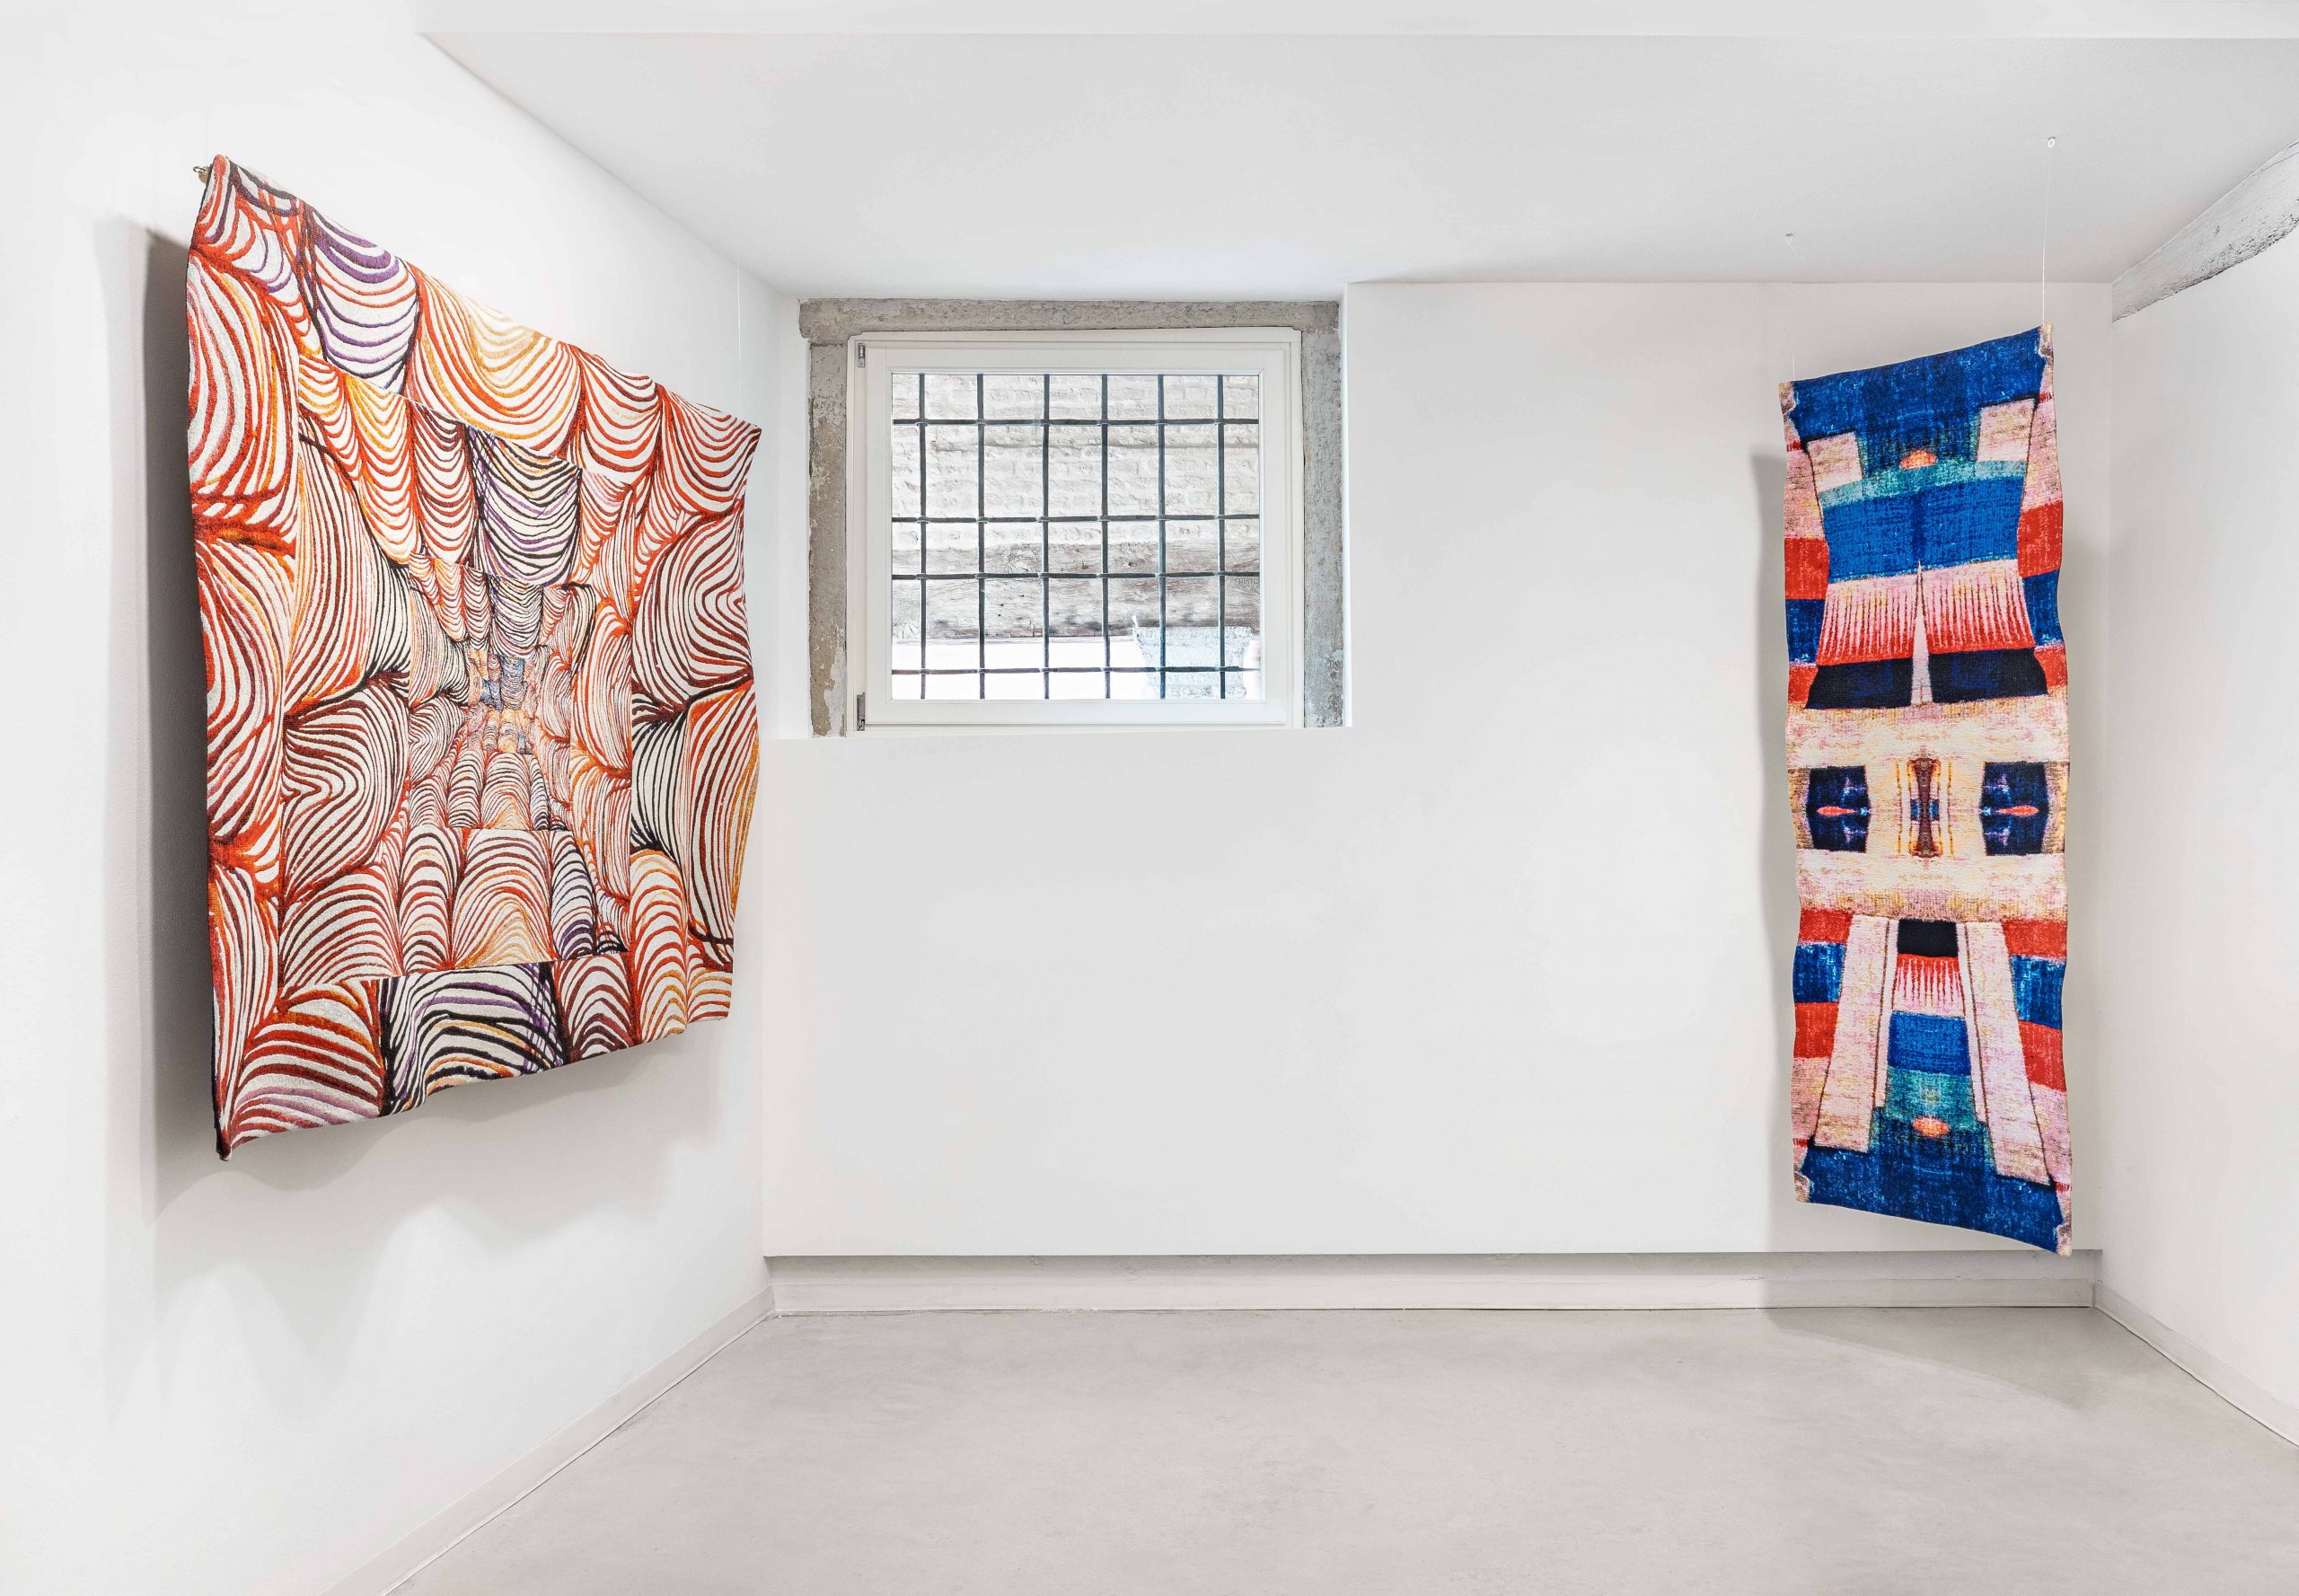 Left: Arazzo Giardino, 2012, tapestry (wool, cotton, silk), 192x133 cm. Right: Bosch, 2014, tapestry (wool, cotton, silk), 60x146 cm. © Enrico Fiorese